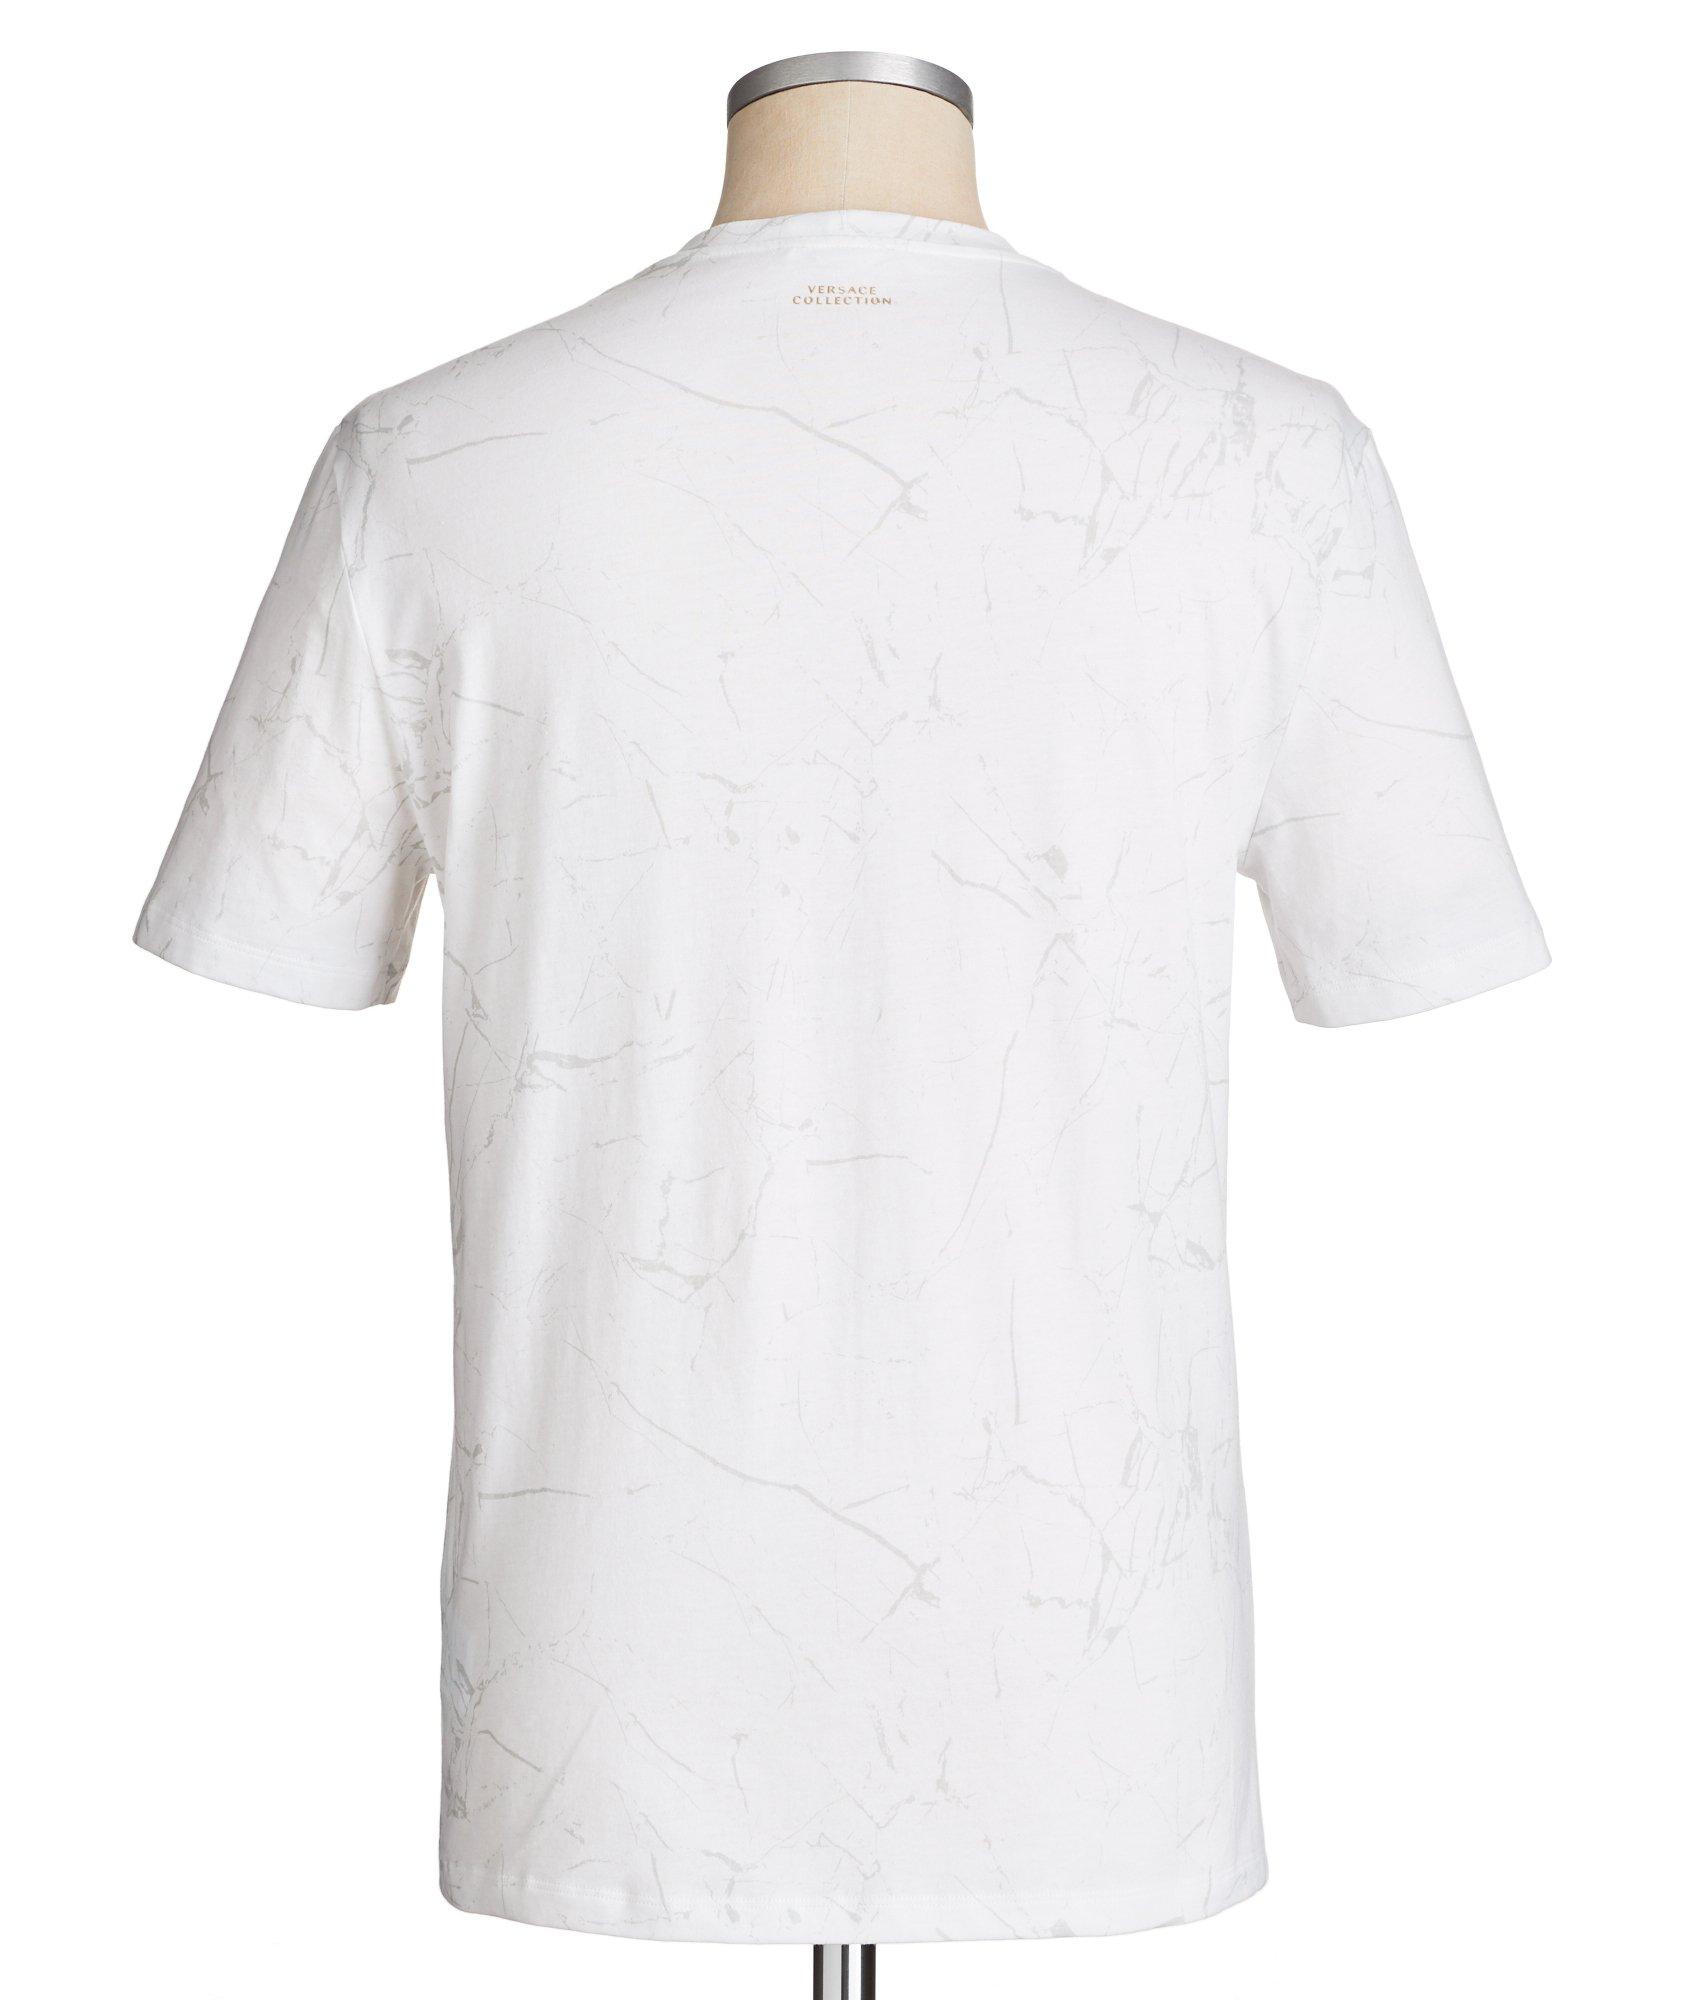 Printed Cotton T-Shirt image 1